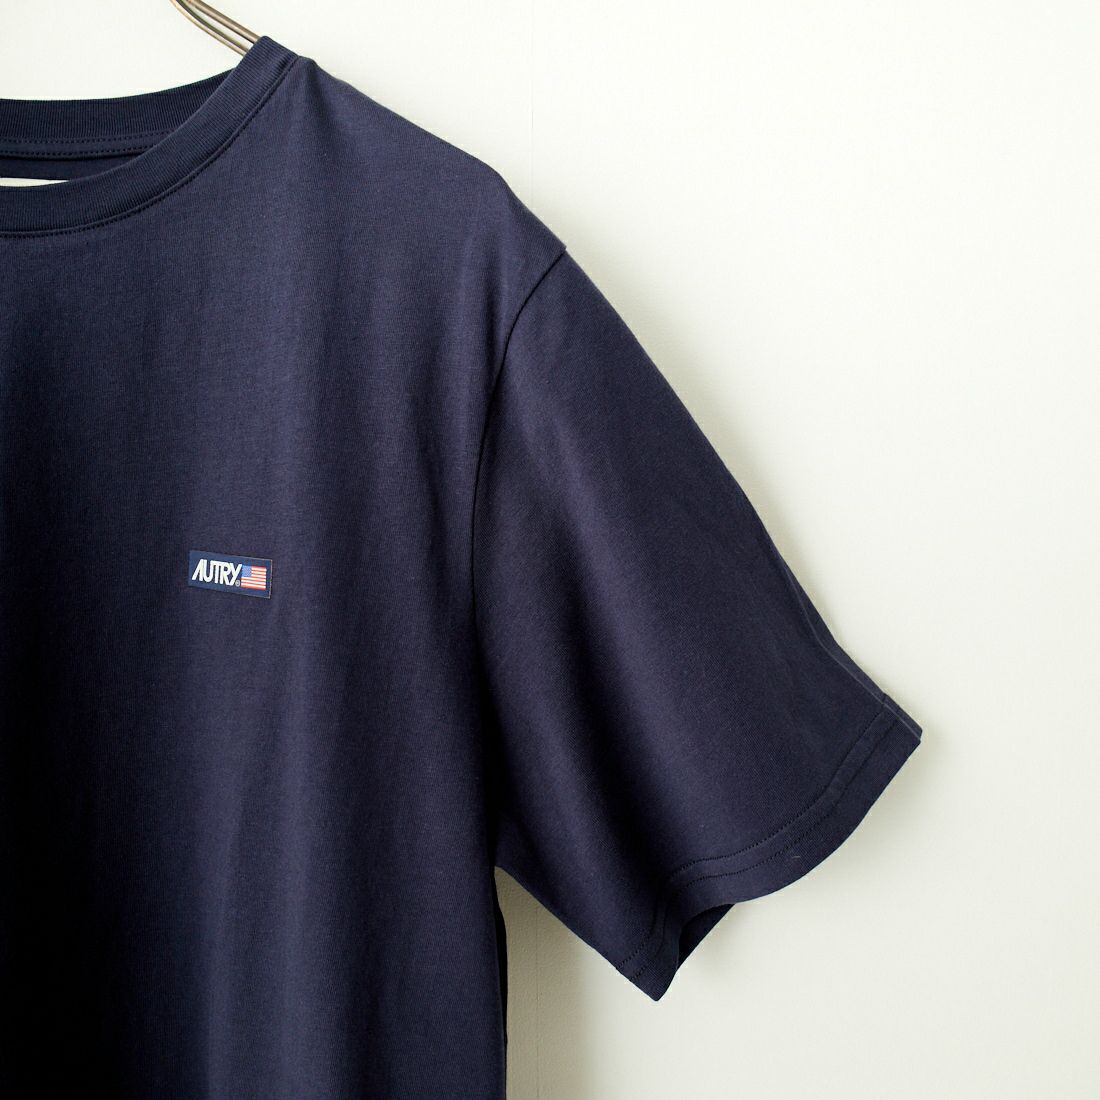 AUTRY [オートリー] ロゴTシャツ [TSPM502] 502B BLUE